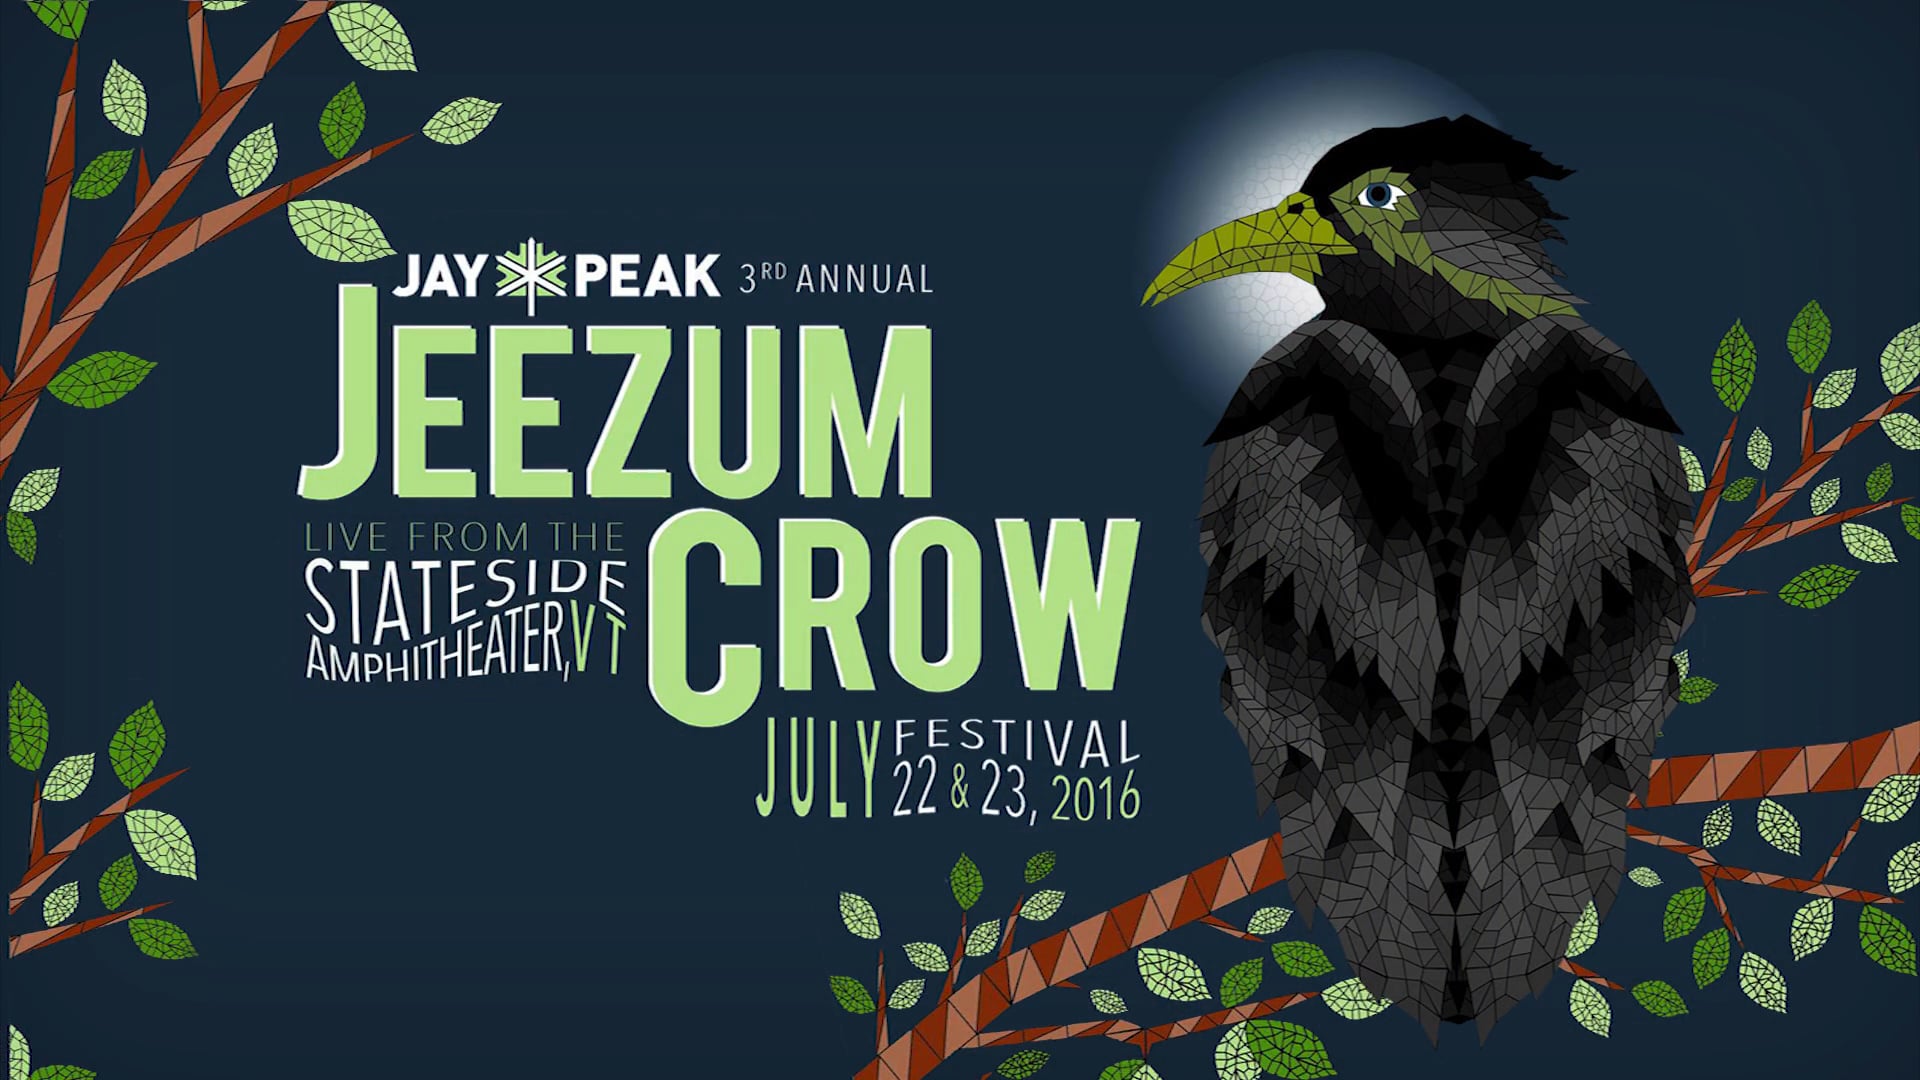 2nd Annual Jeezum Crow Festival on Vimeo